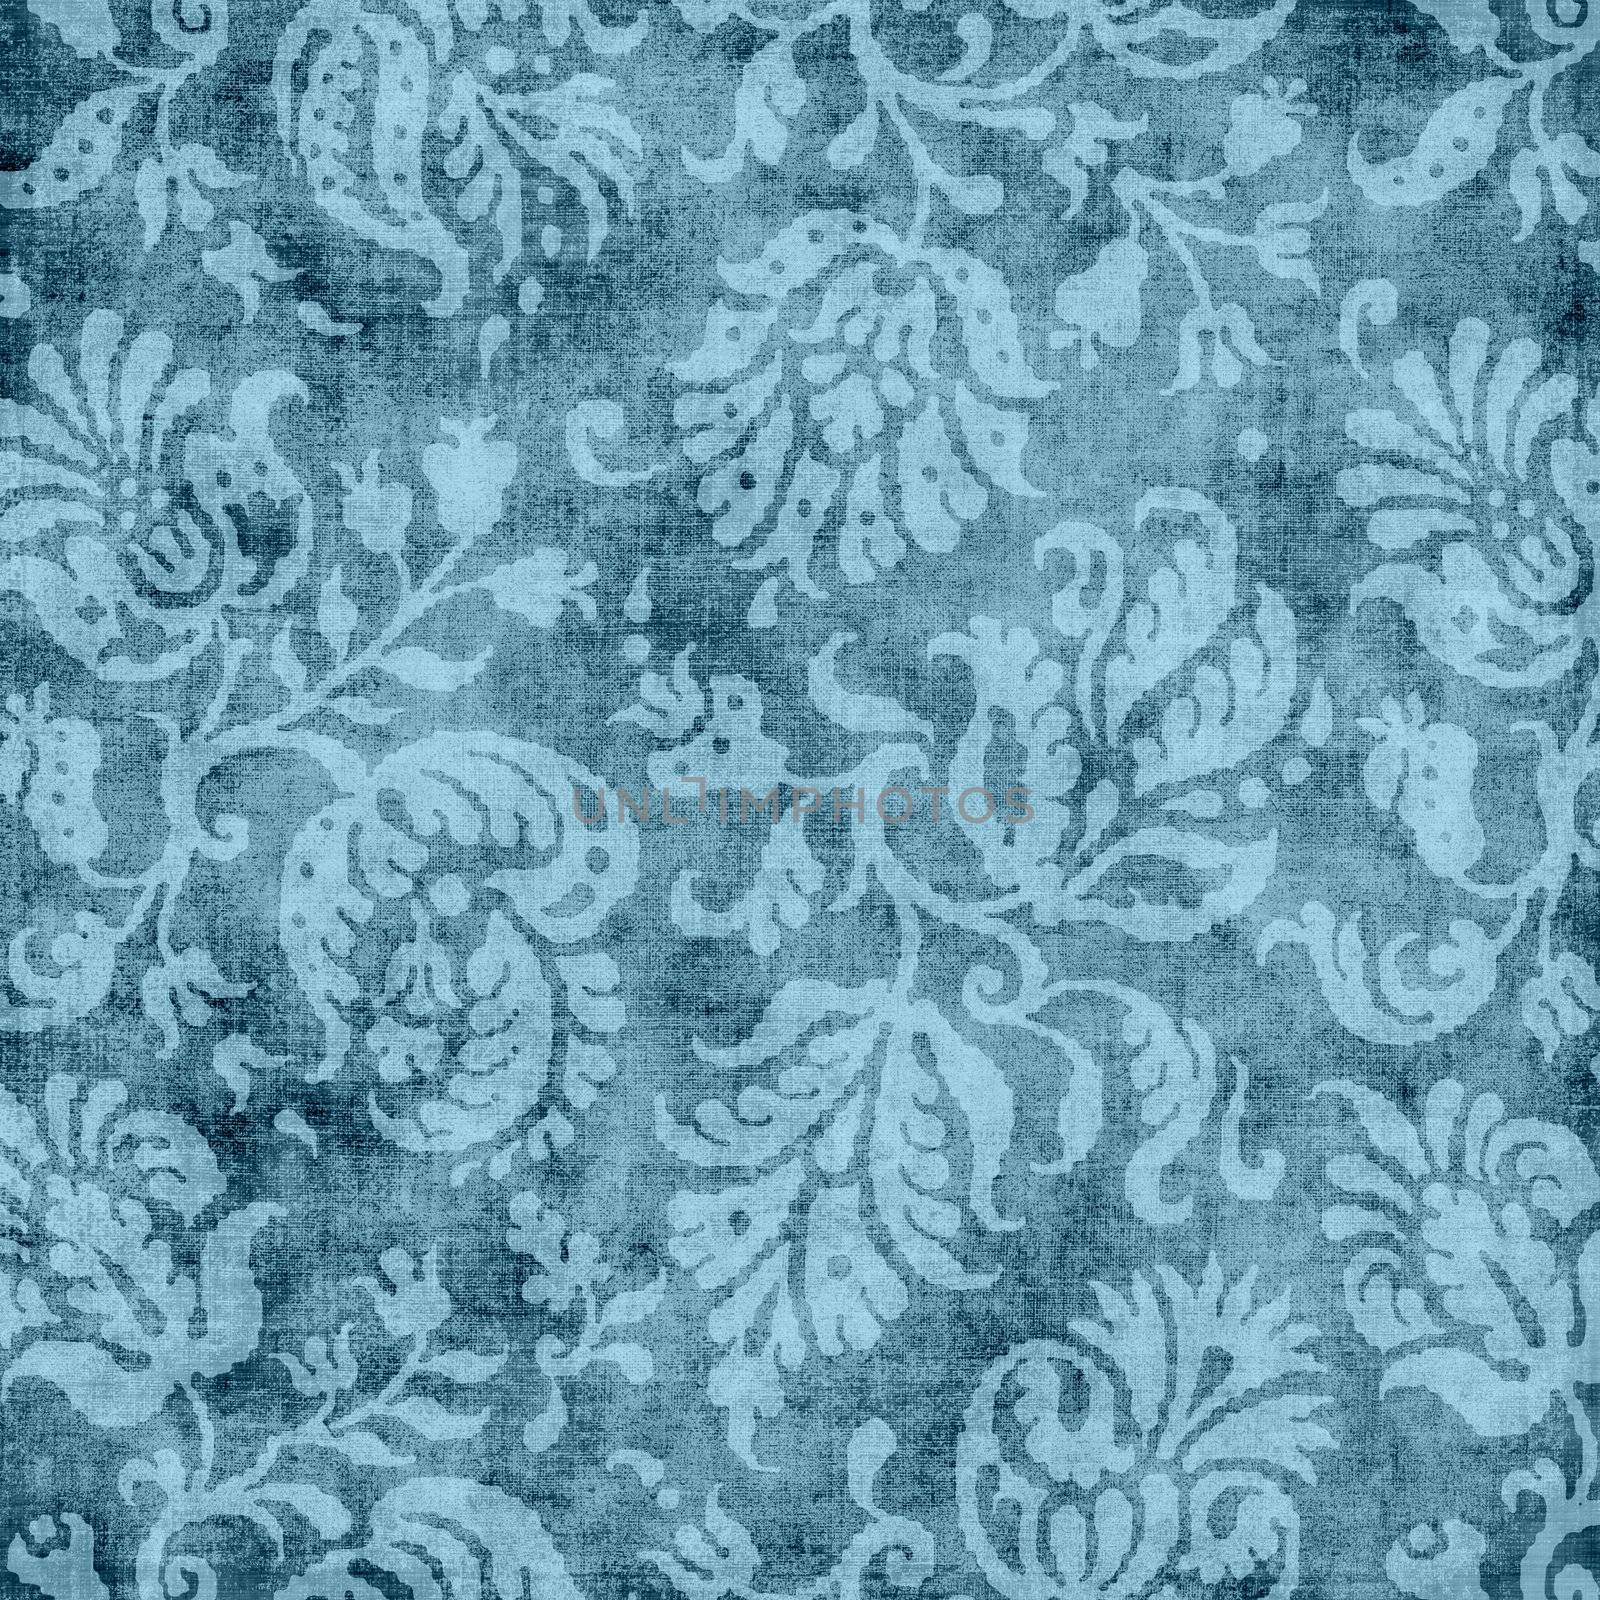 Vintage Blue Floral Tapestry by SongPixels